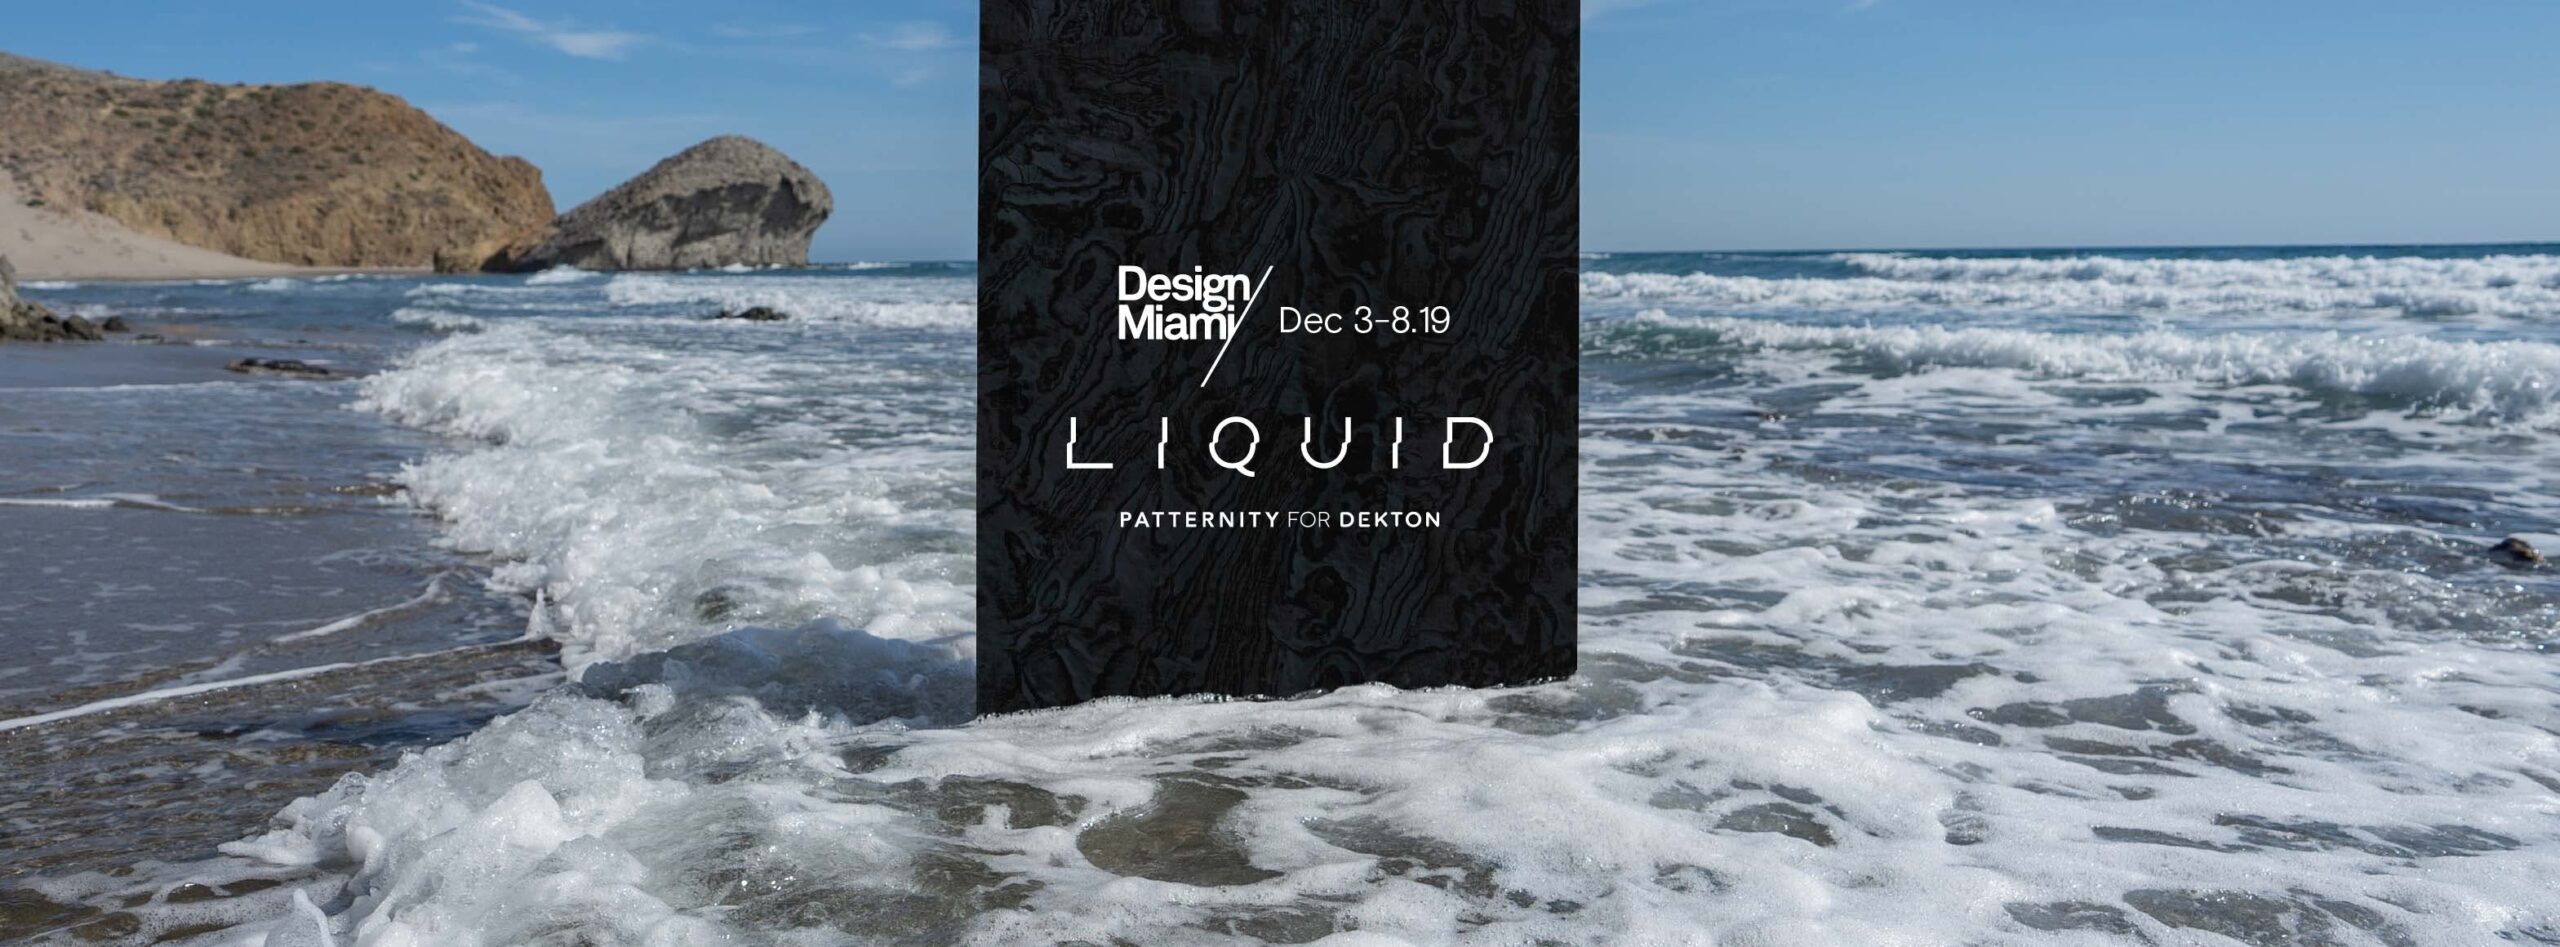 Image 36 of Liquid Miami 1 2 scaled in Cosentino returns to Miami Design Week 2019 - Cosentino